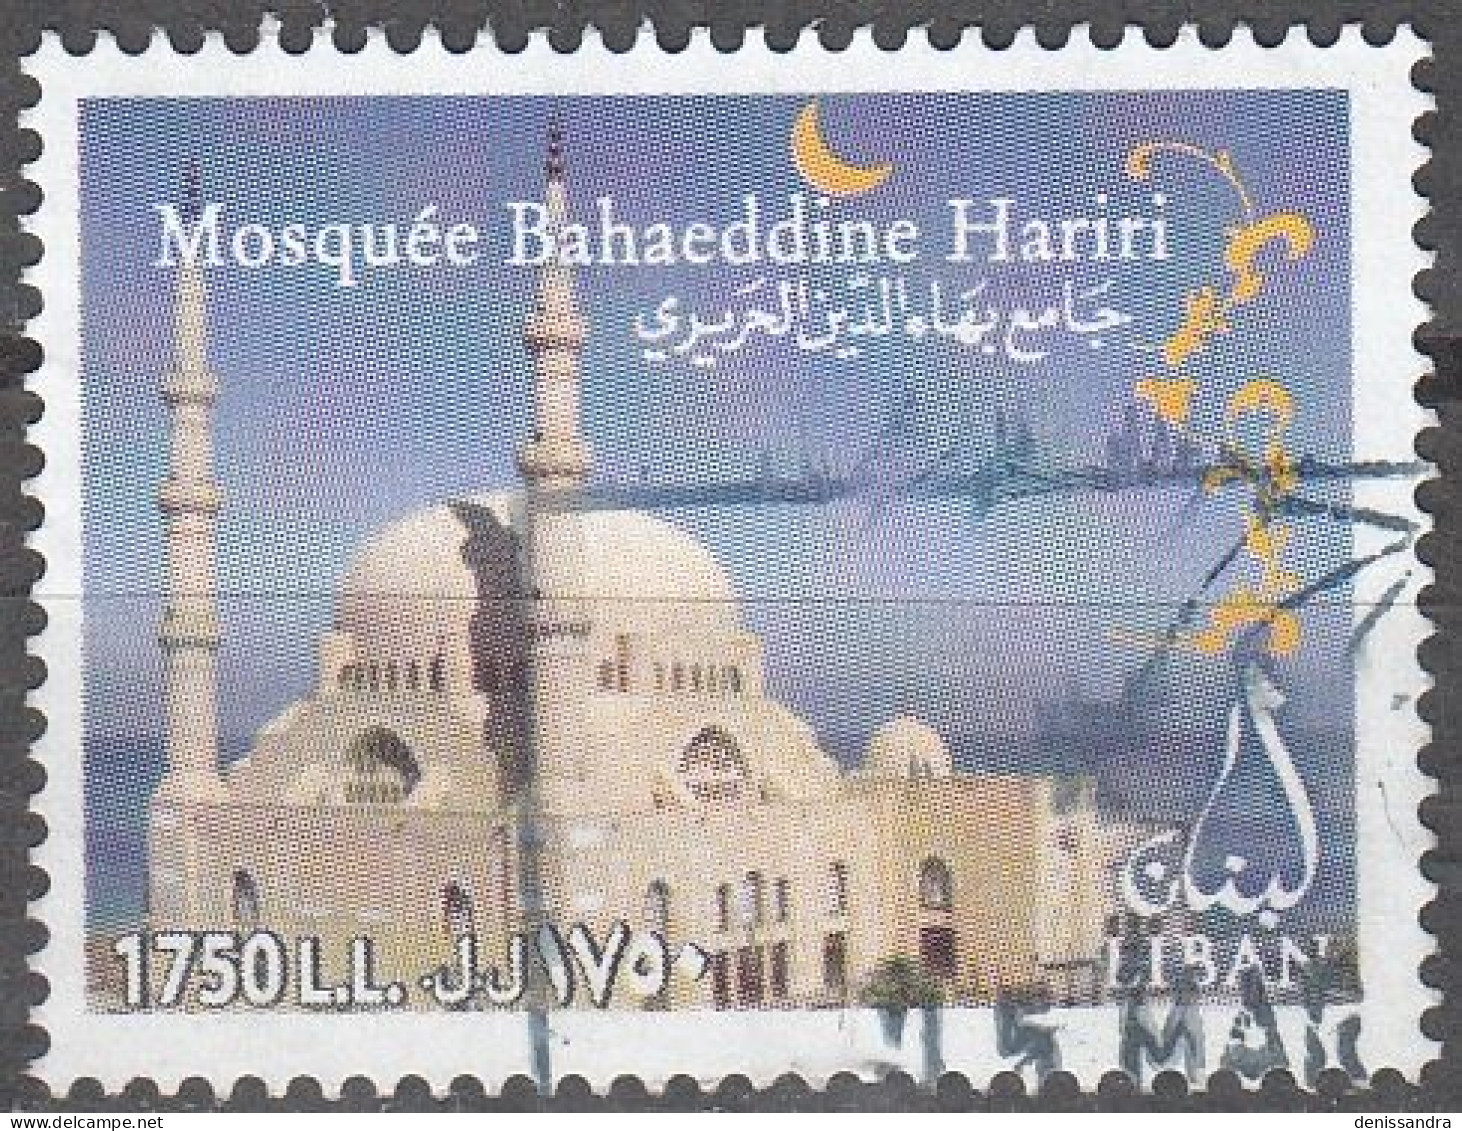 Liban 2005 Michel 1465 O Cote (2007) 3.50 € Mosquée Bahaeddine Hariri Cachet Rond - Líbano